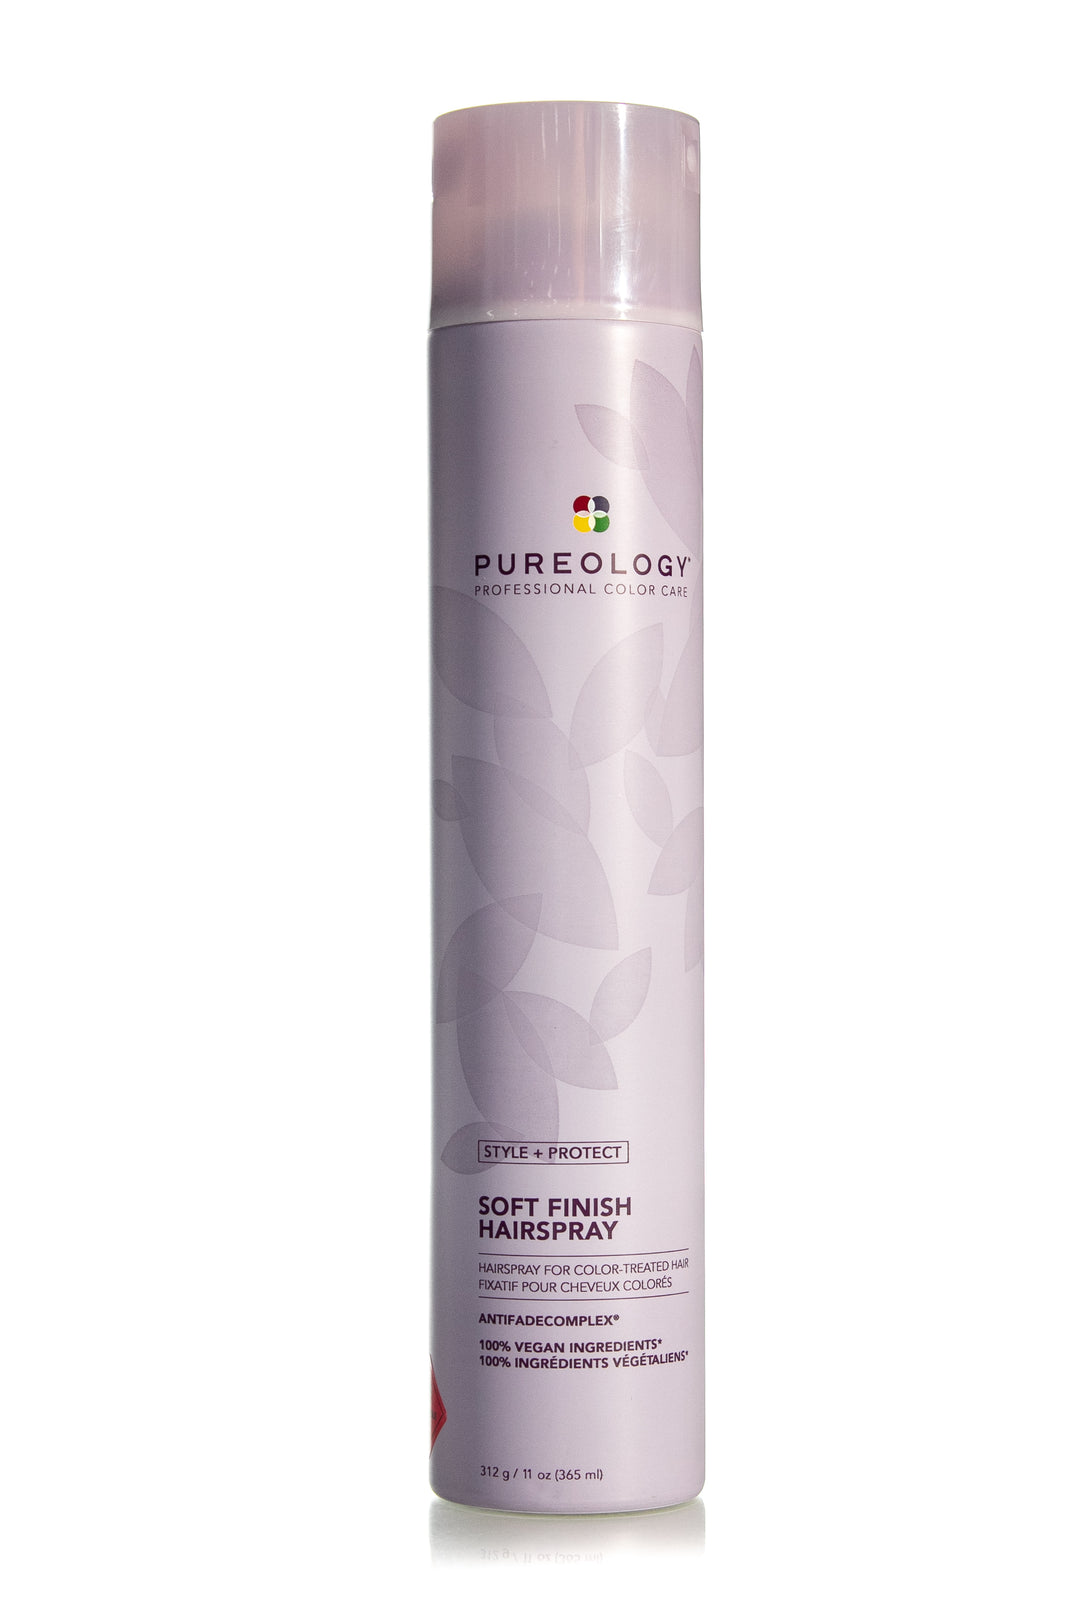 PUREOLOGY Soft Finish Hairspray | 365ml